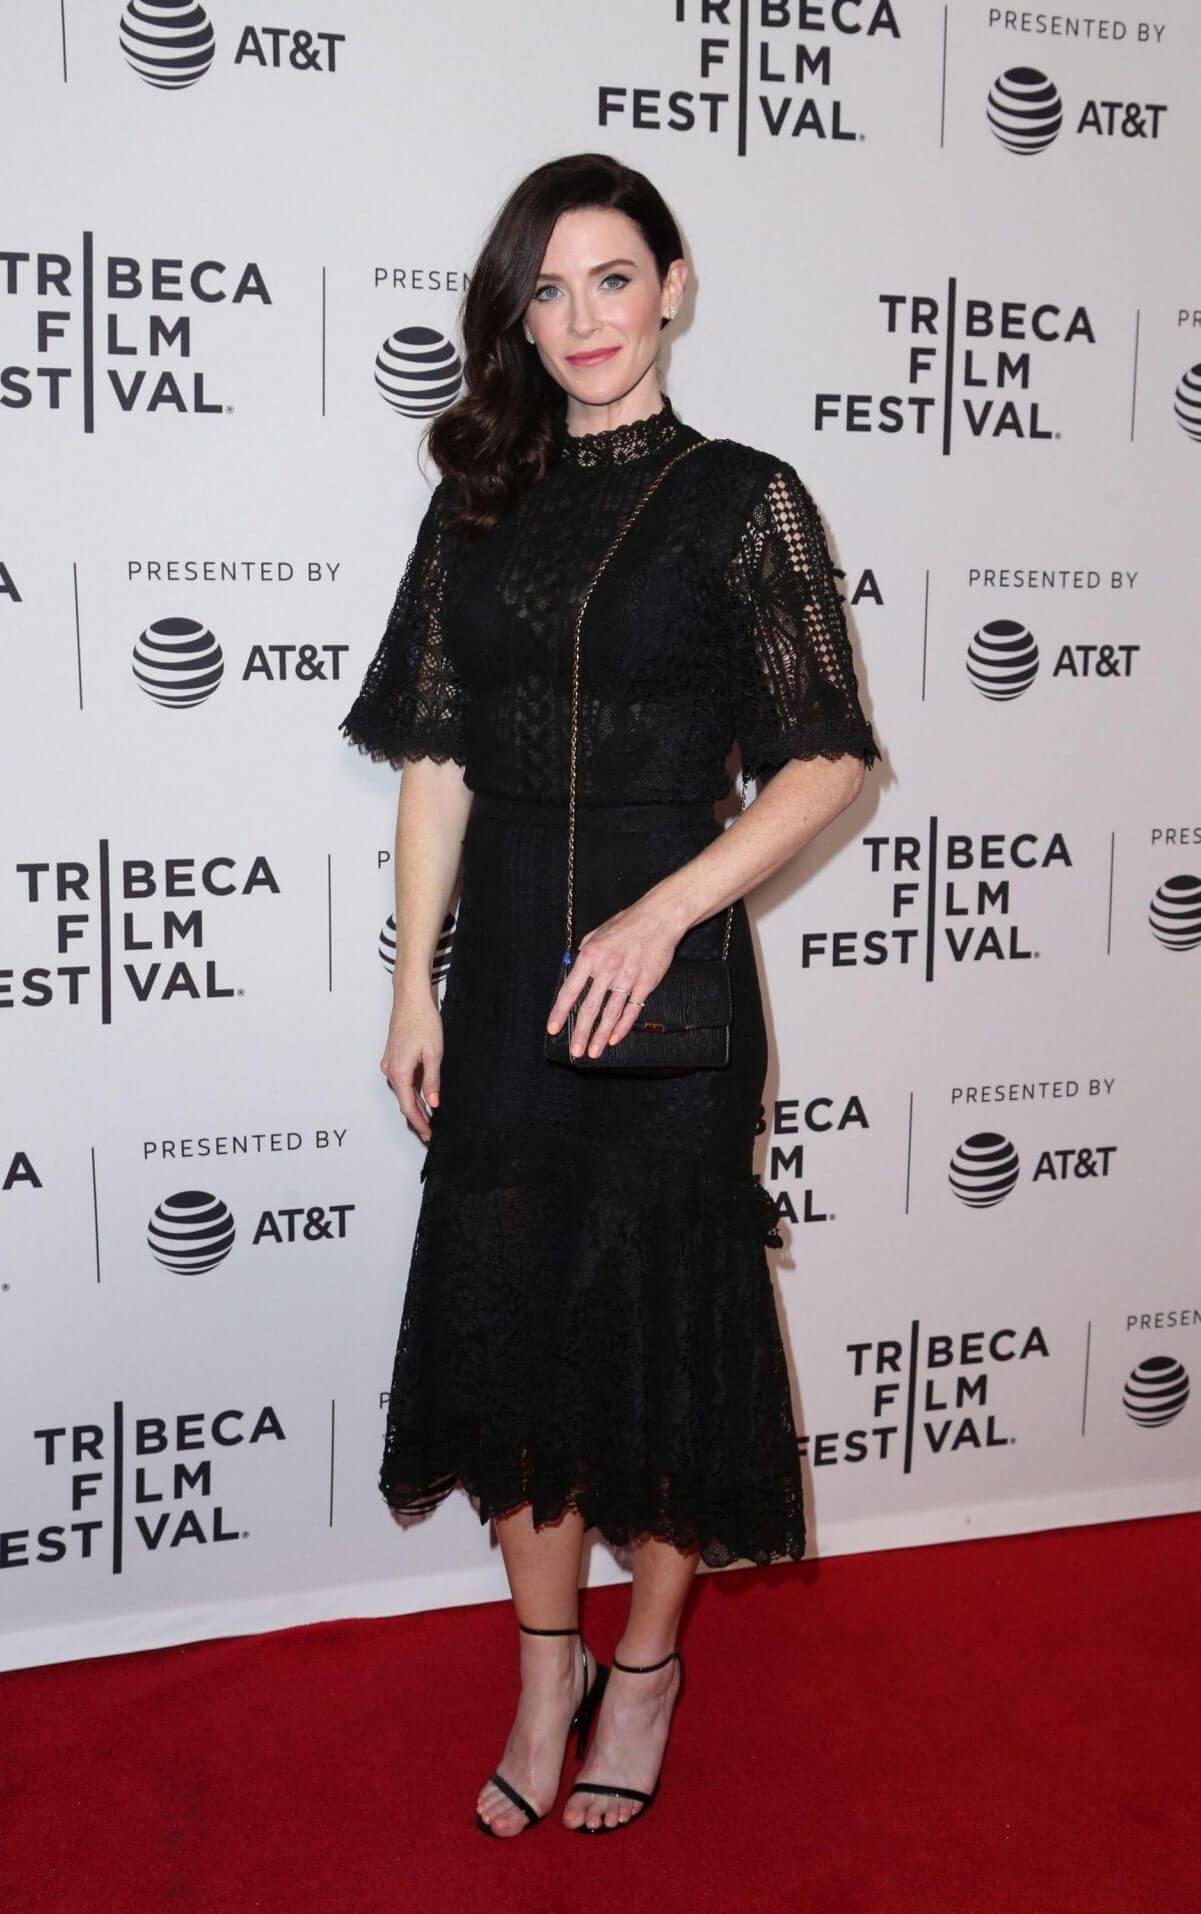 Bridget Regan  In Black Half Sleeves Layered  Long Dress With Sling Bag At“Devil’s Gate” Premiere at Tribeca Film Festival